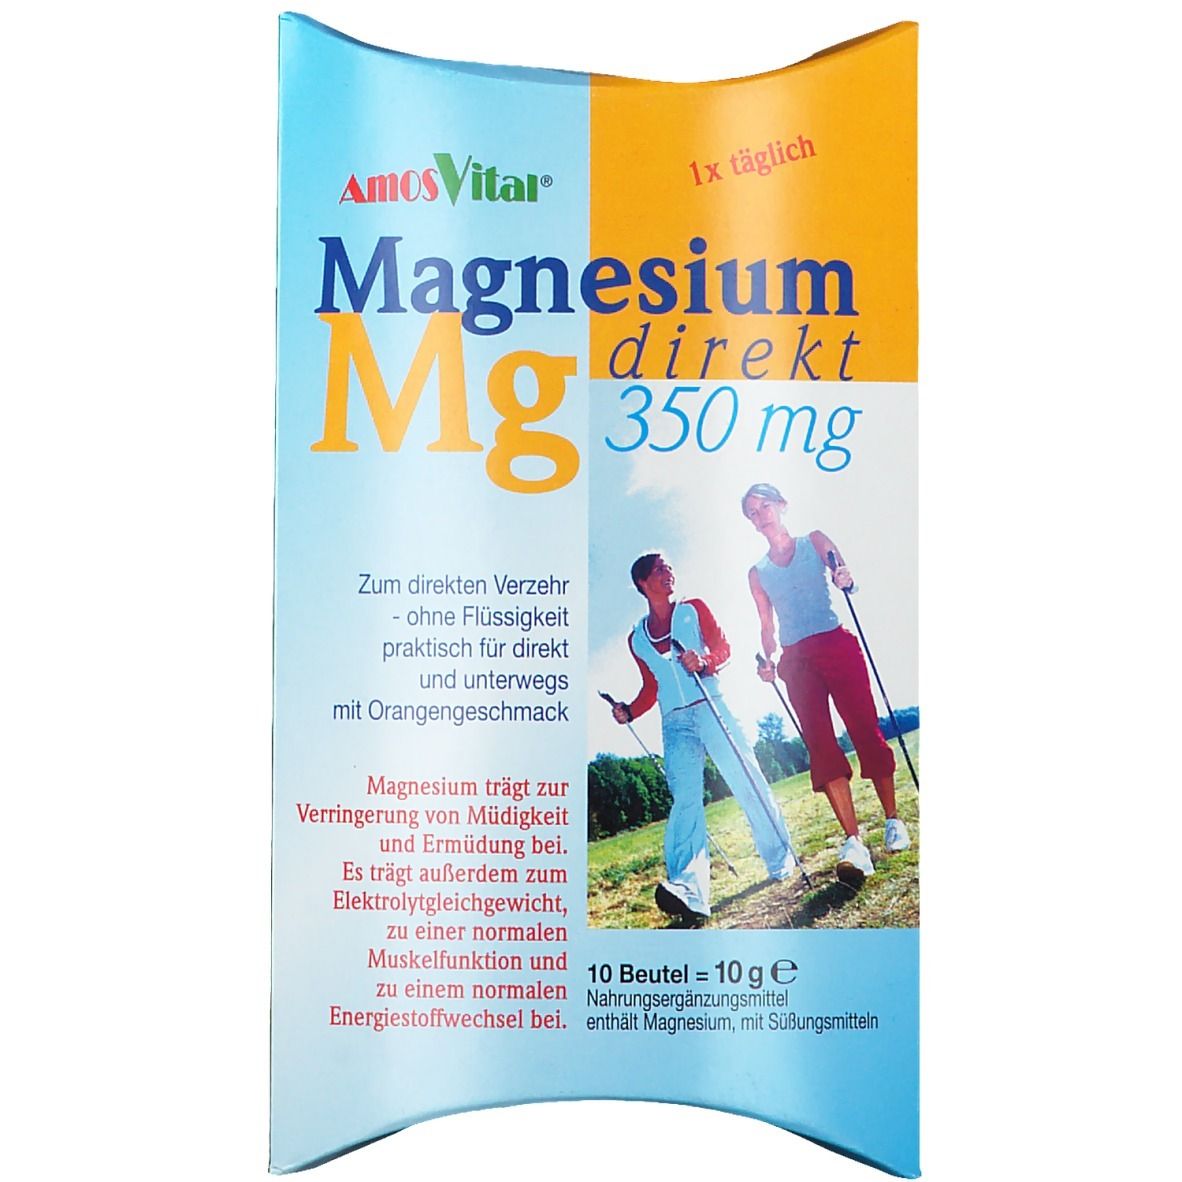 AmosVital® Magnesium Direct 350 mg sachet